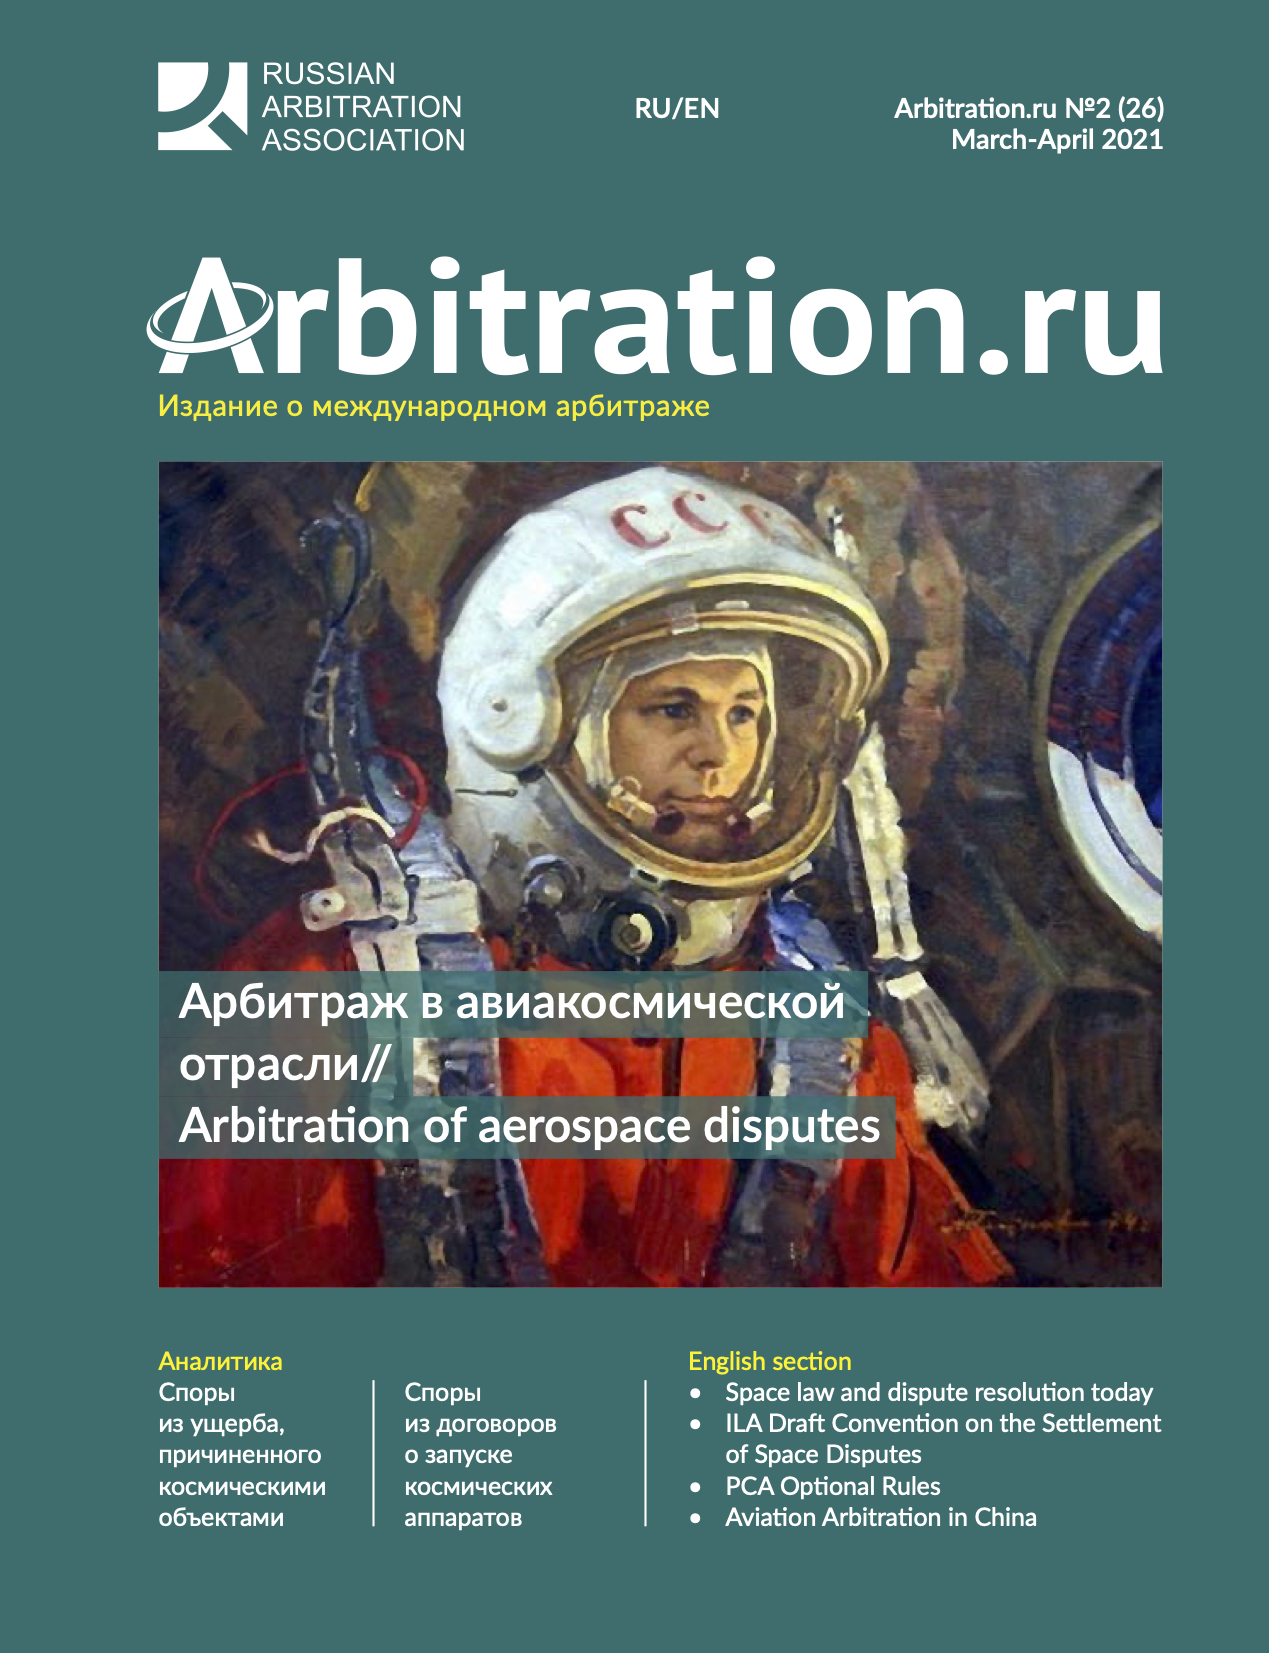 Arbitration.ru, March-April 2021: Arbitration of aerospace disputes